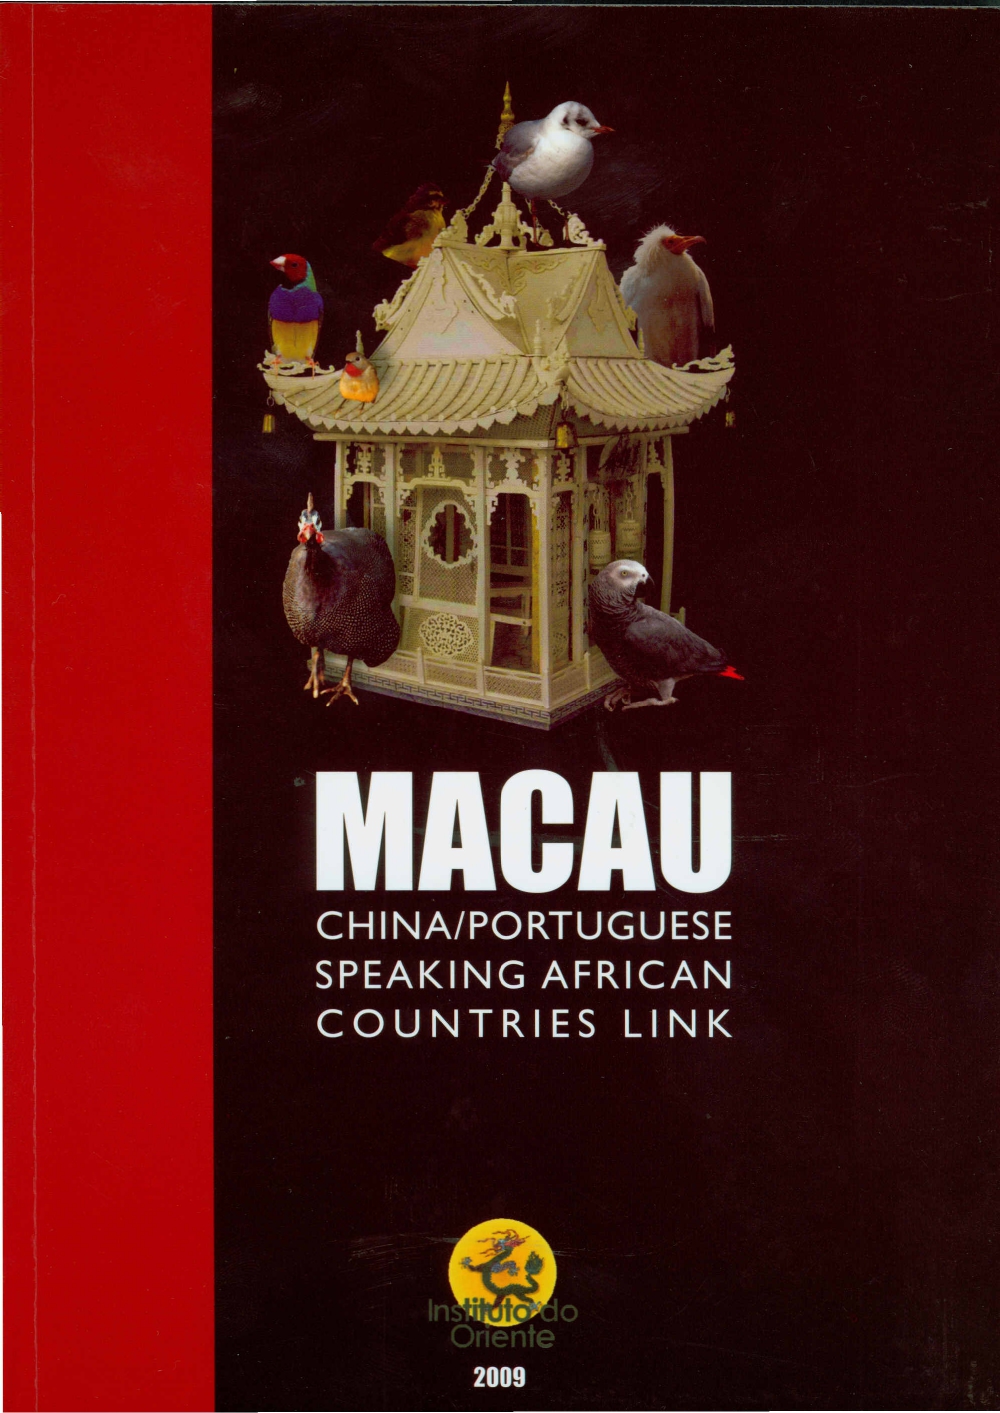 Macau: China/Portuguese Speaking African Countries Link